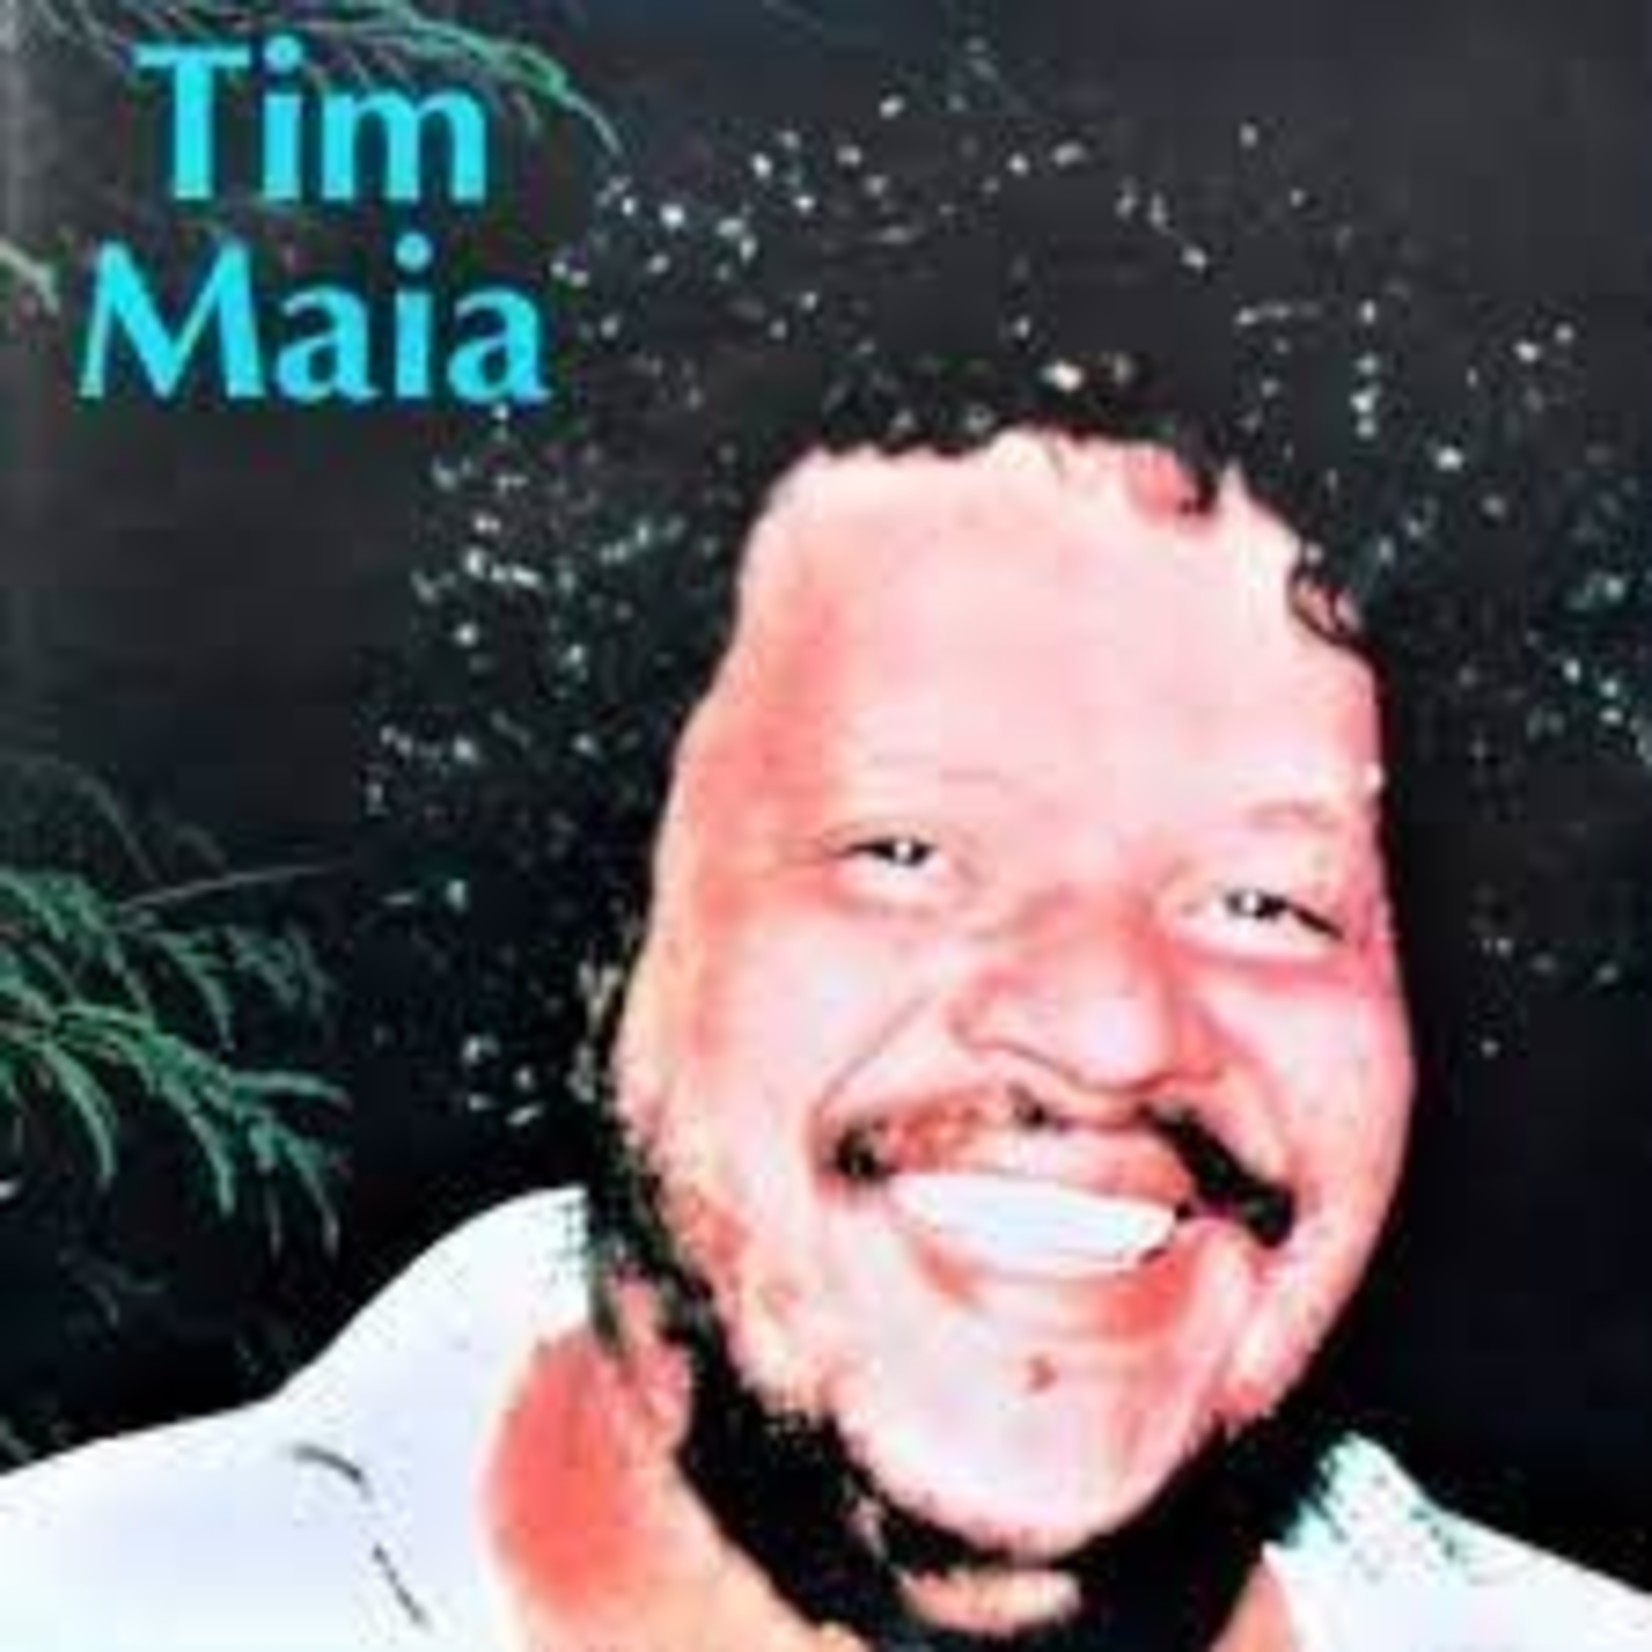 Maia, Tim: Tim Maia (color vinyl) [FUTURE SHOCK]